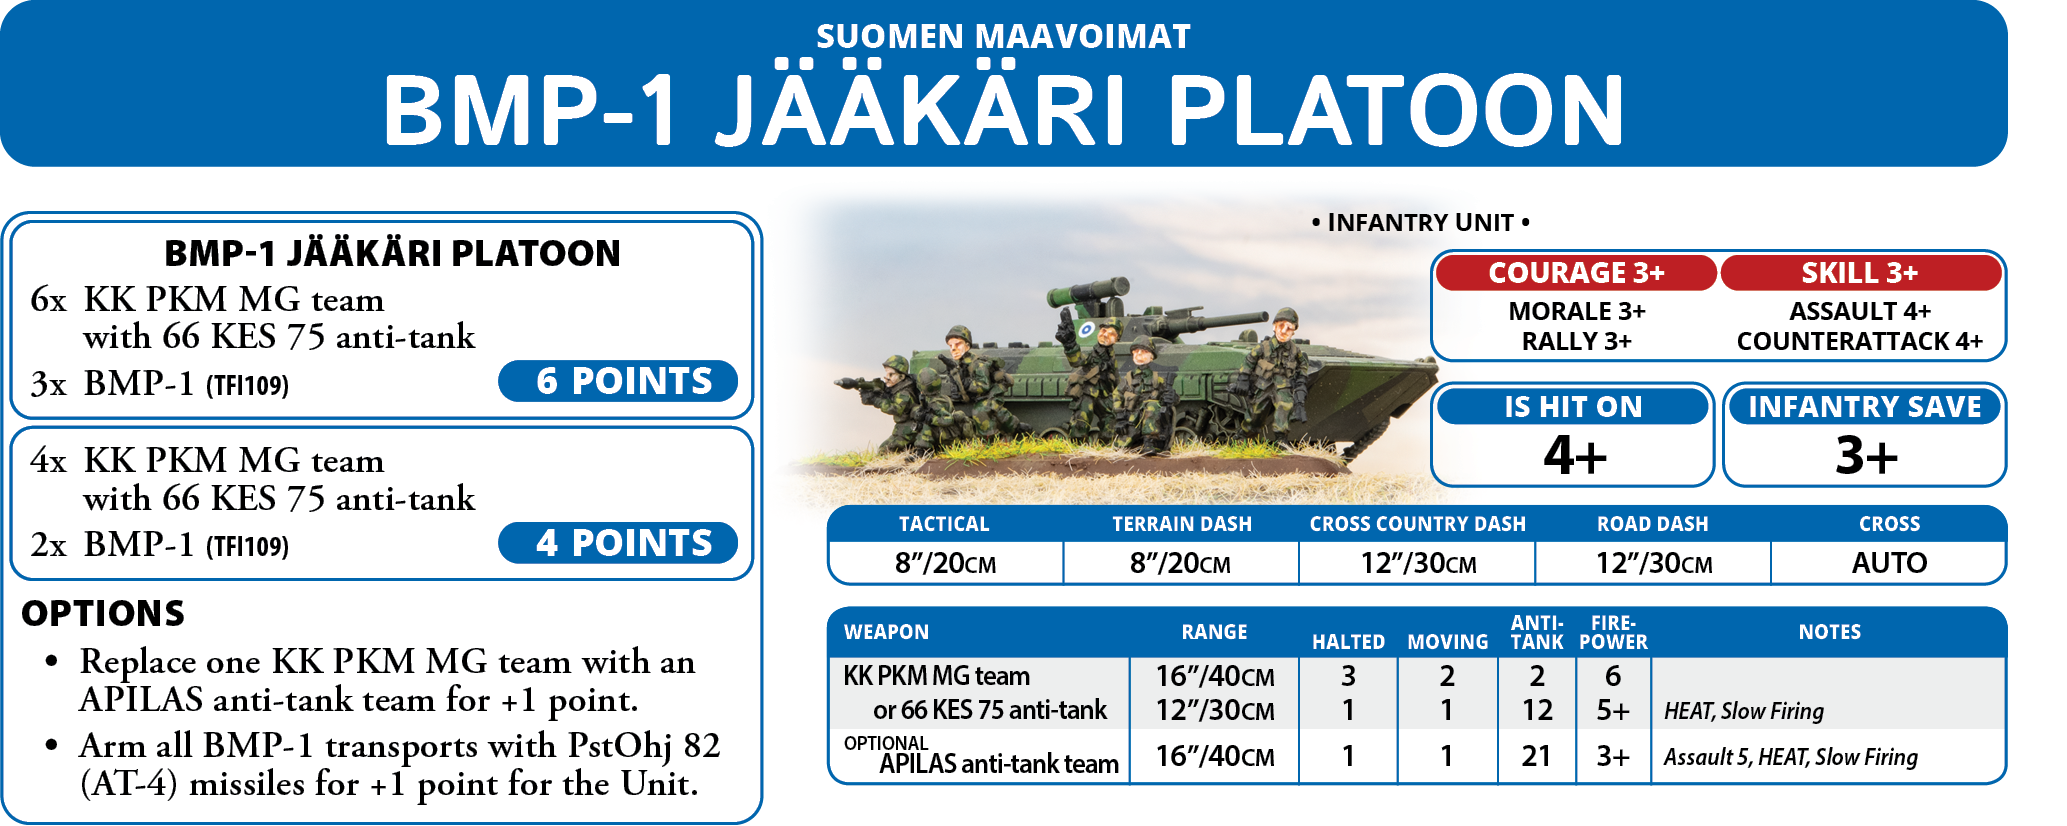 BMP-1 Jakaari Platoon